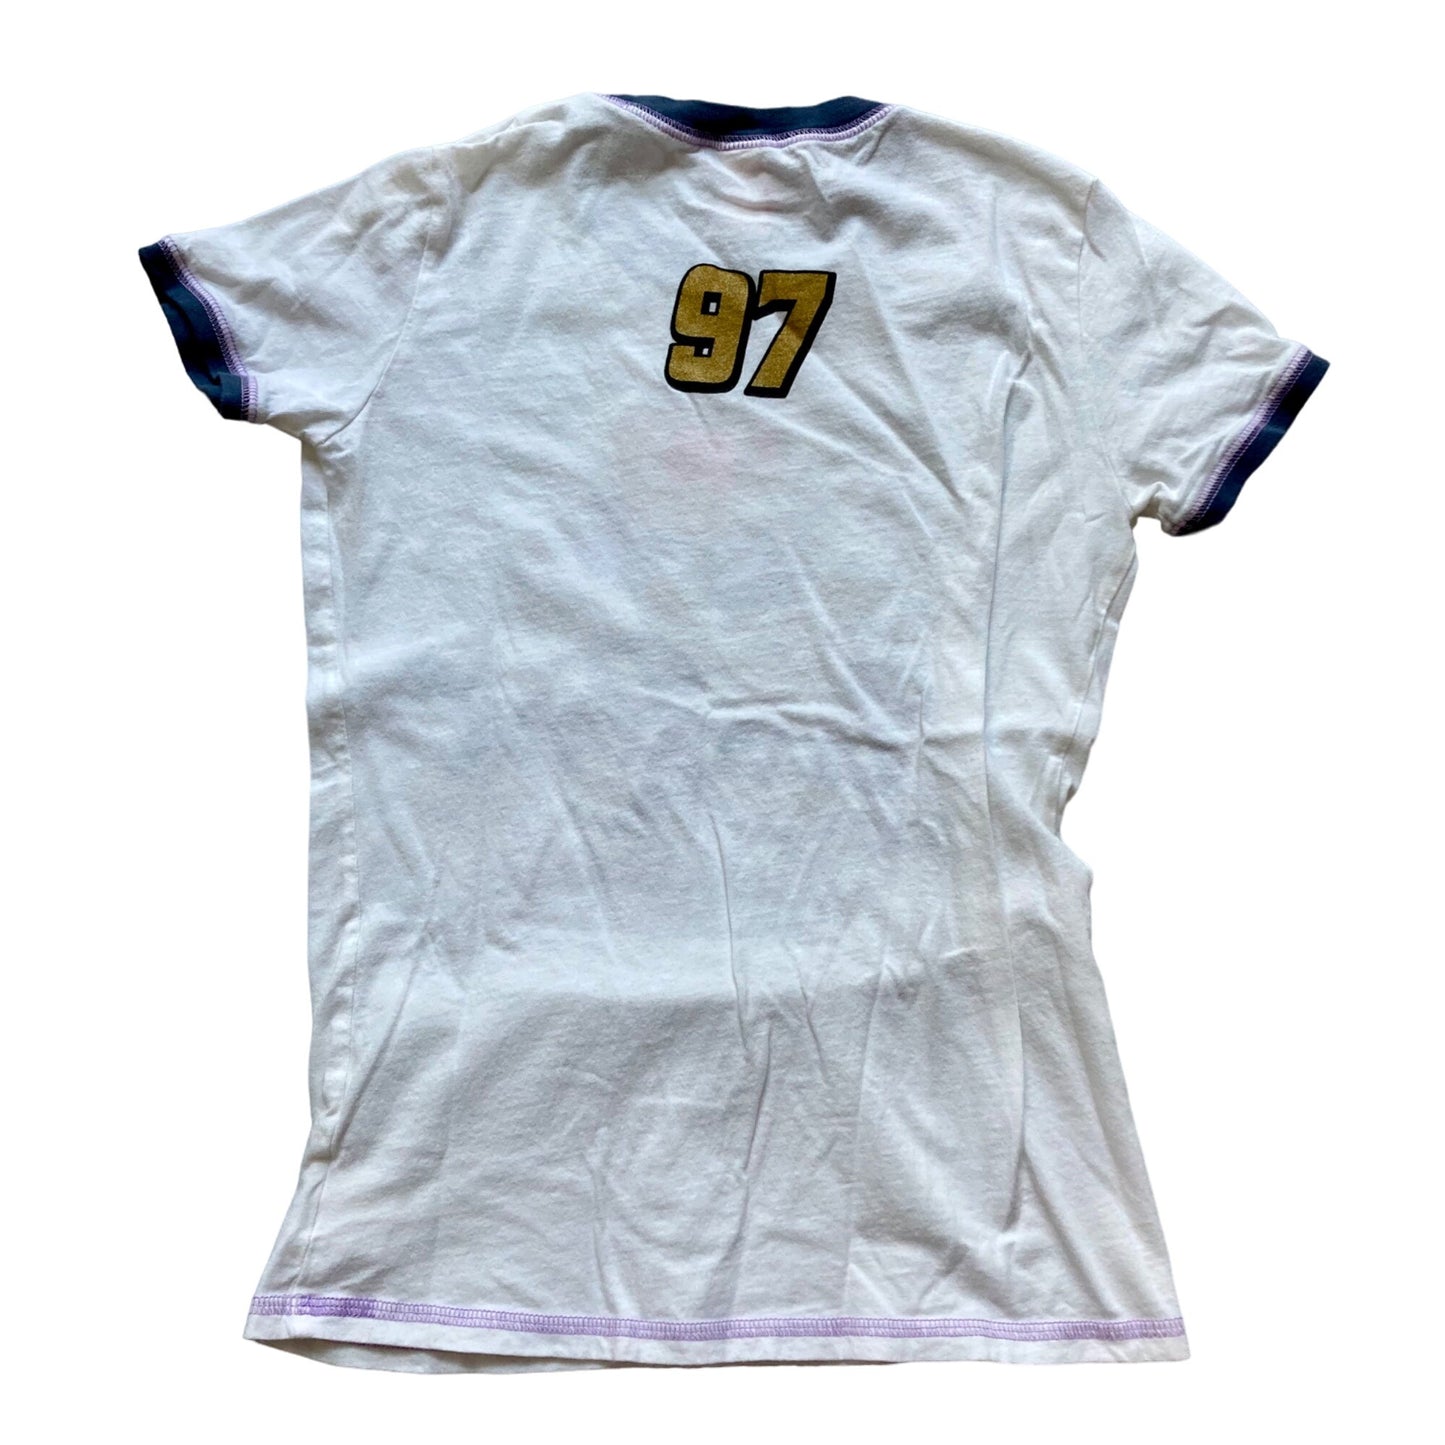 Vintage Kurt Busch #97 Crown Royal NASCAR T-Shirt Women's Size S NICE!